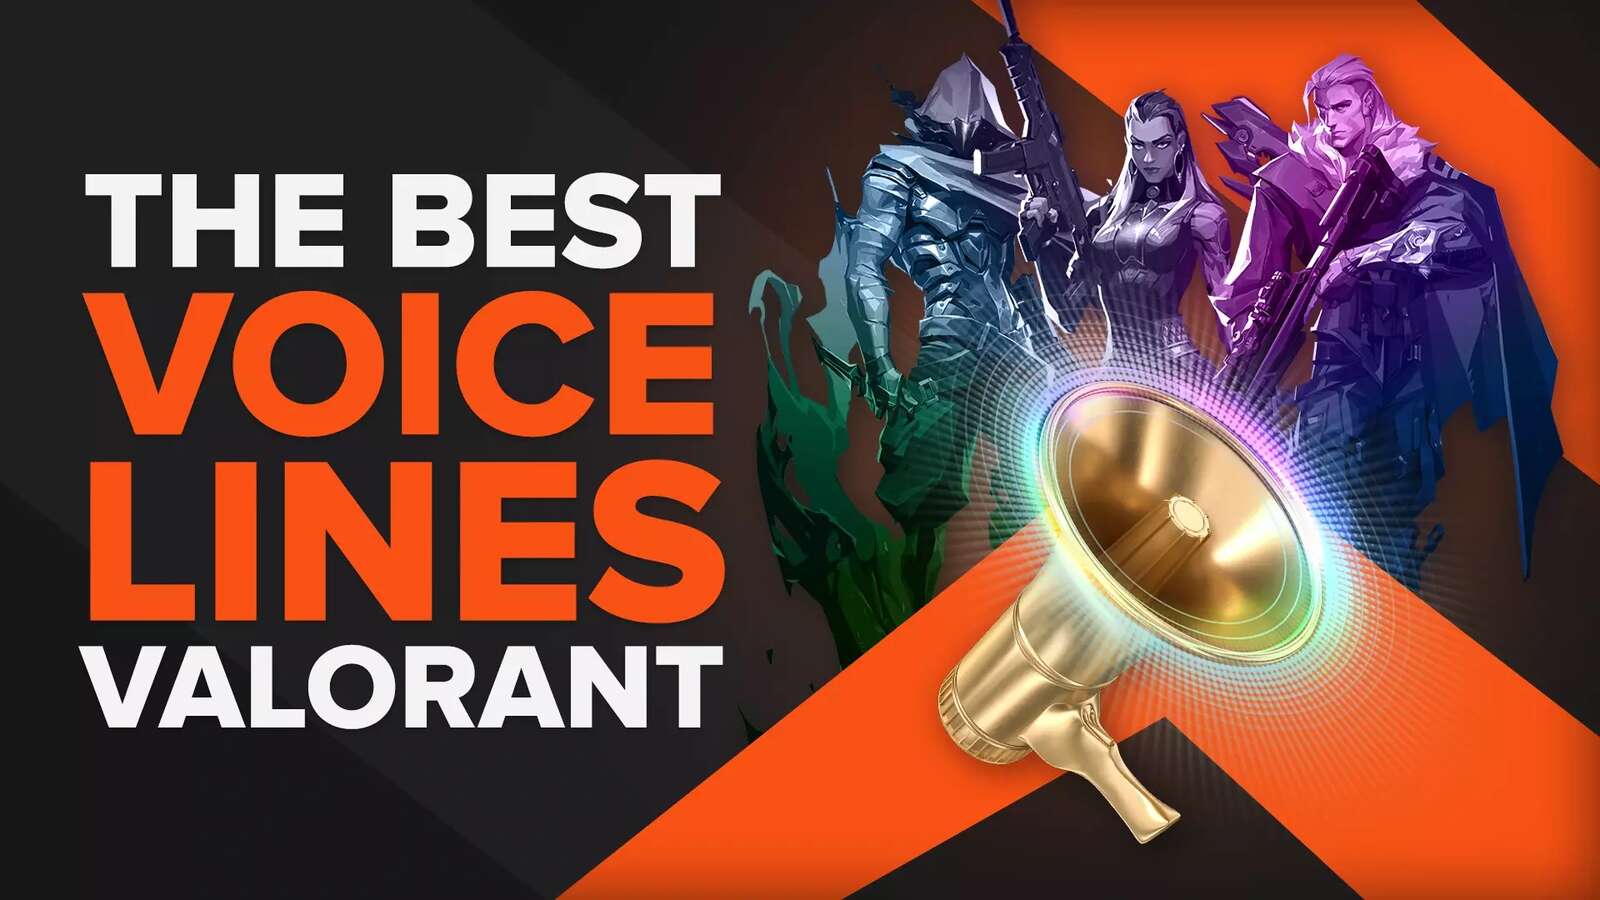 10 Best Voice Lines Valorant [Ranked]